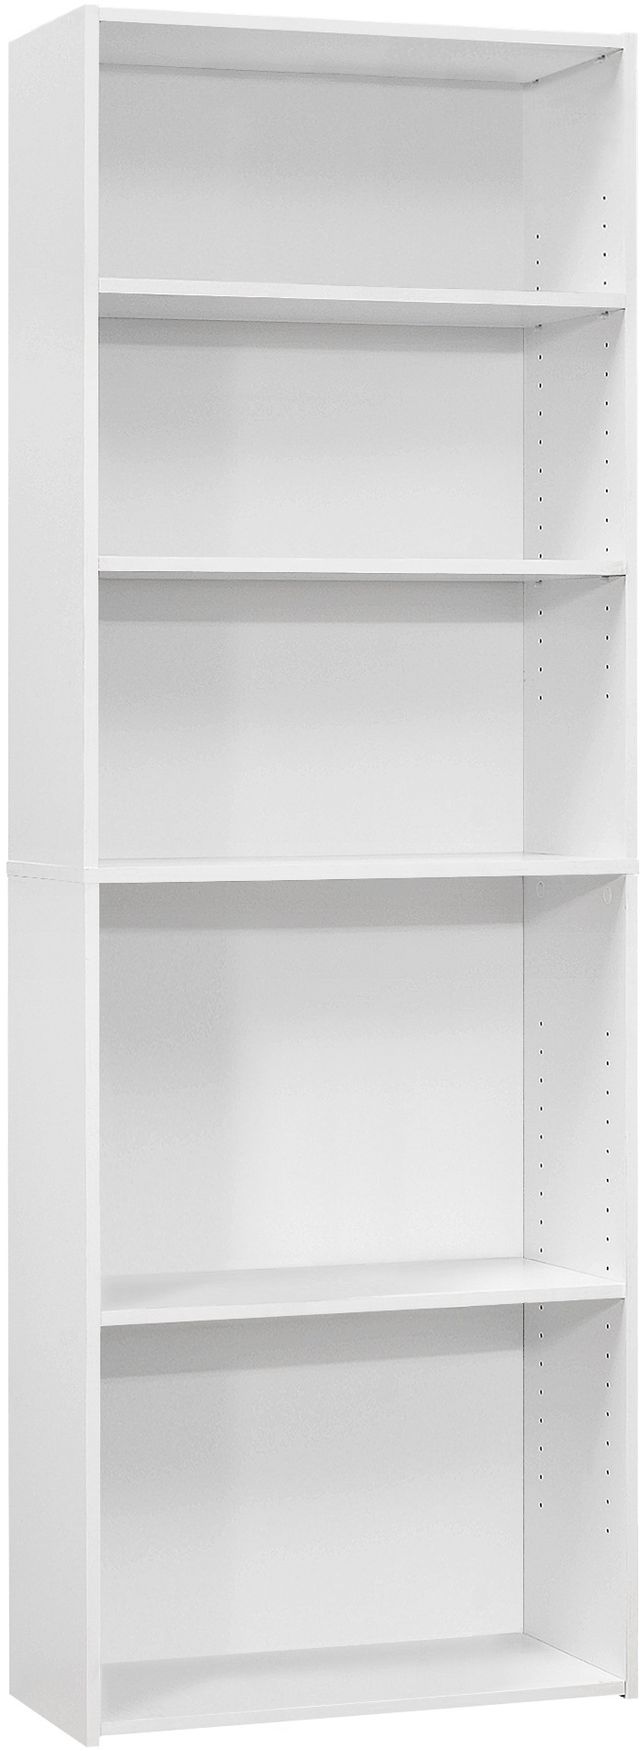 Monarch Specialties Inc. 72"H White 5 Shelves Bookcase 1